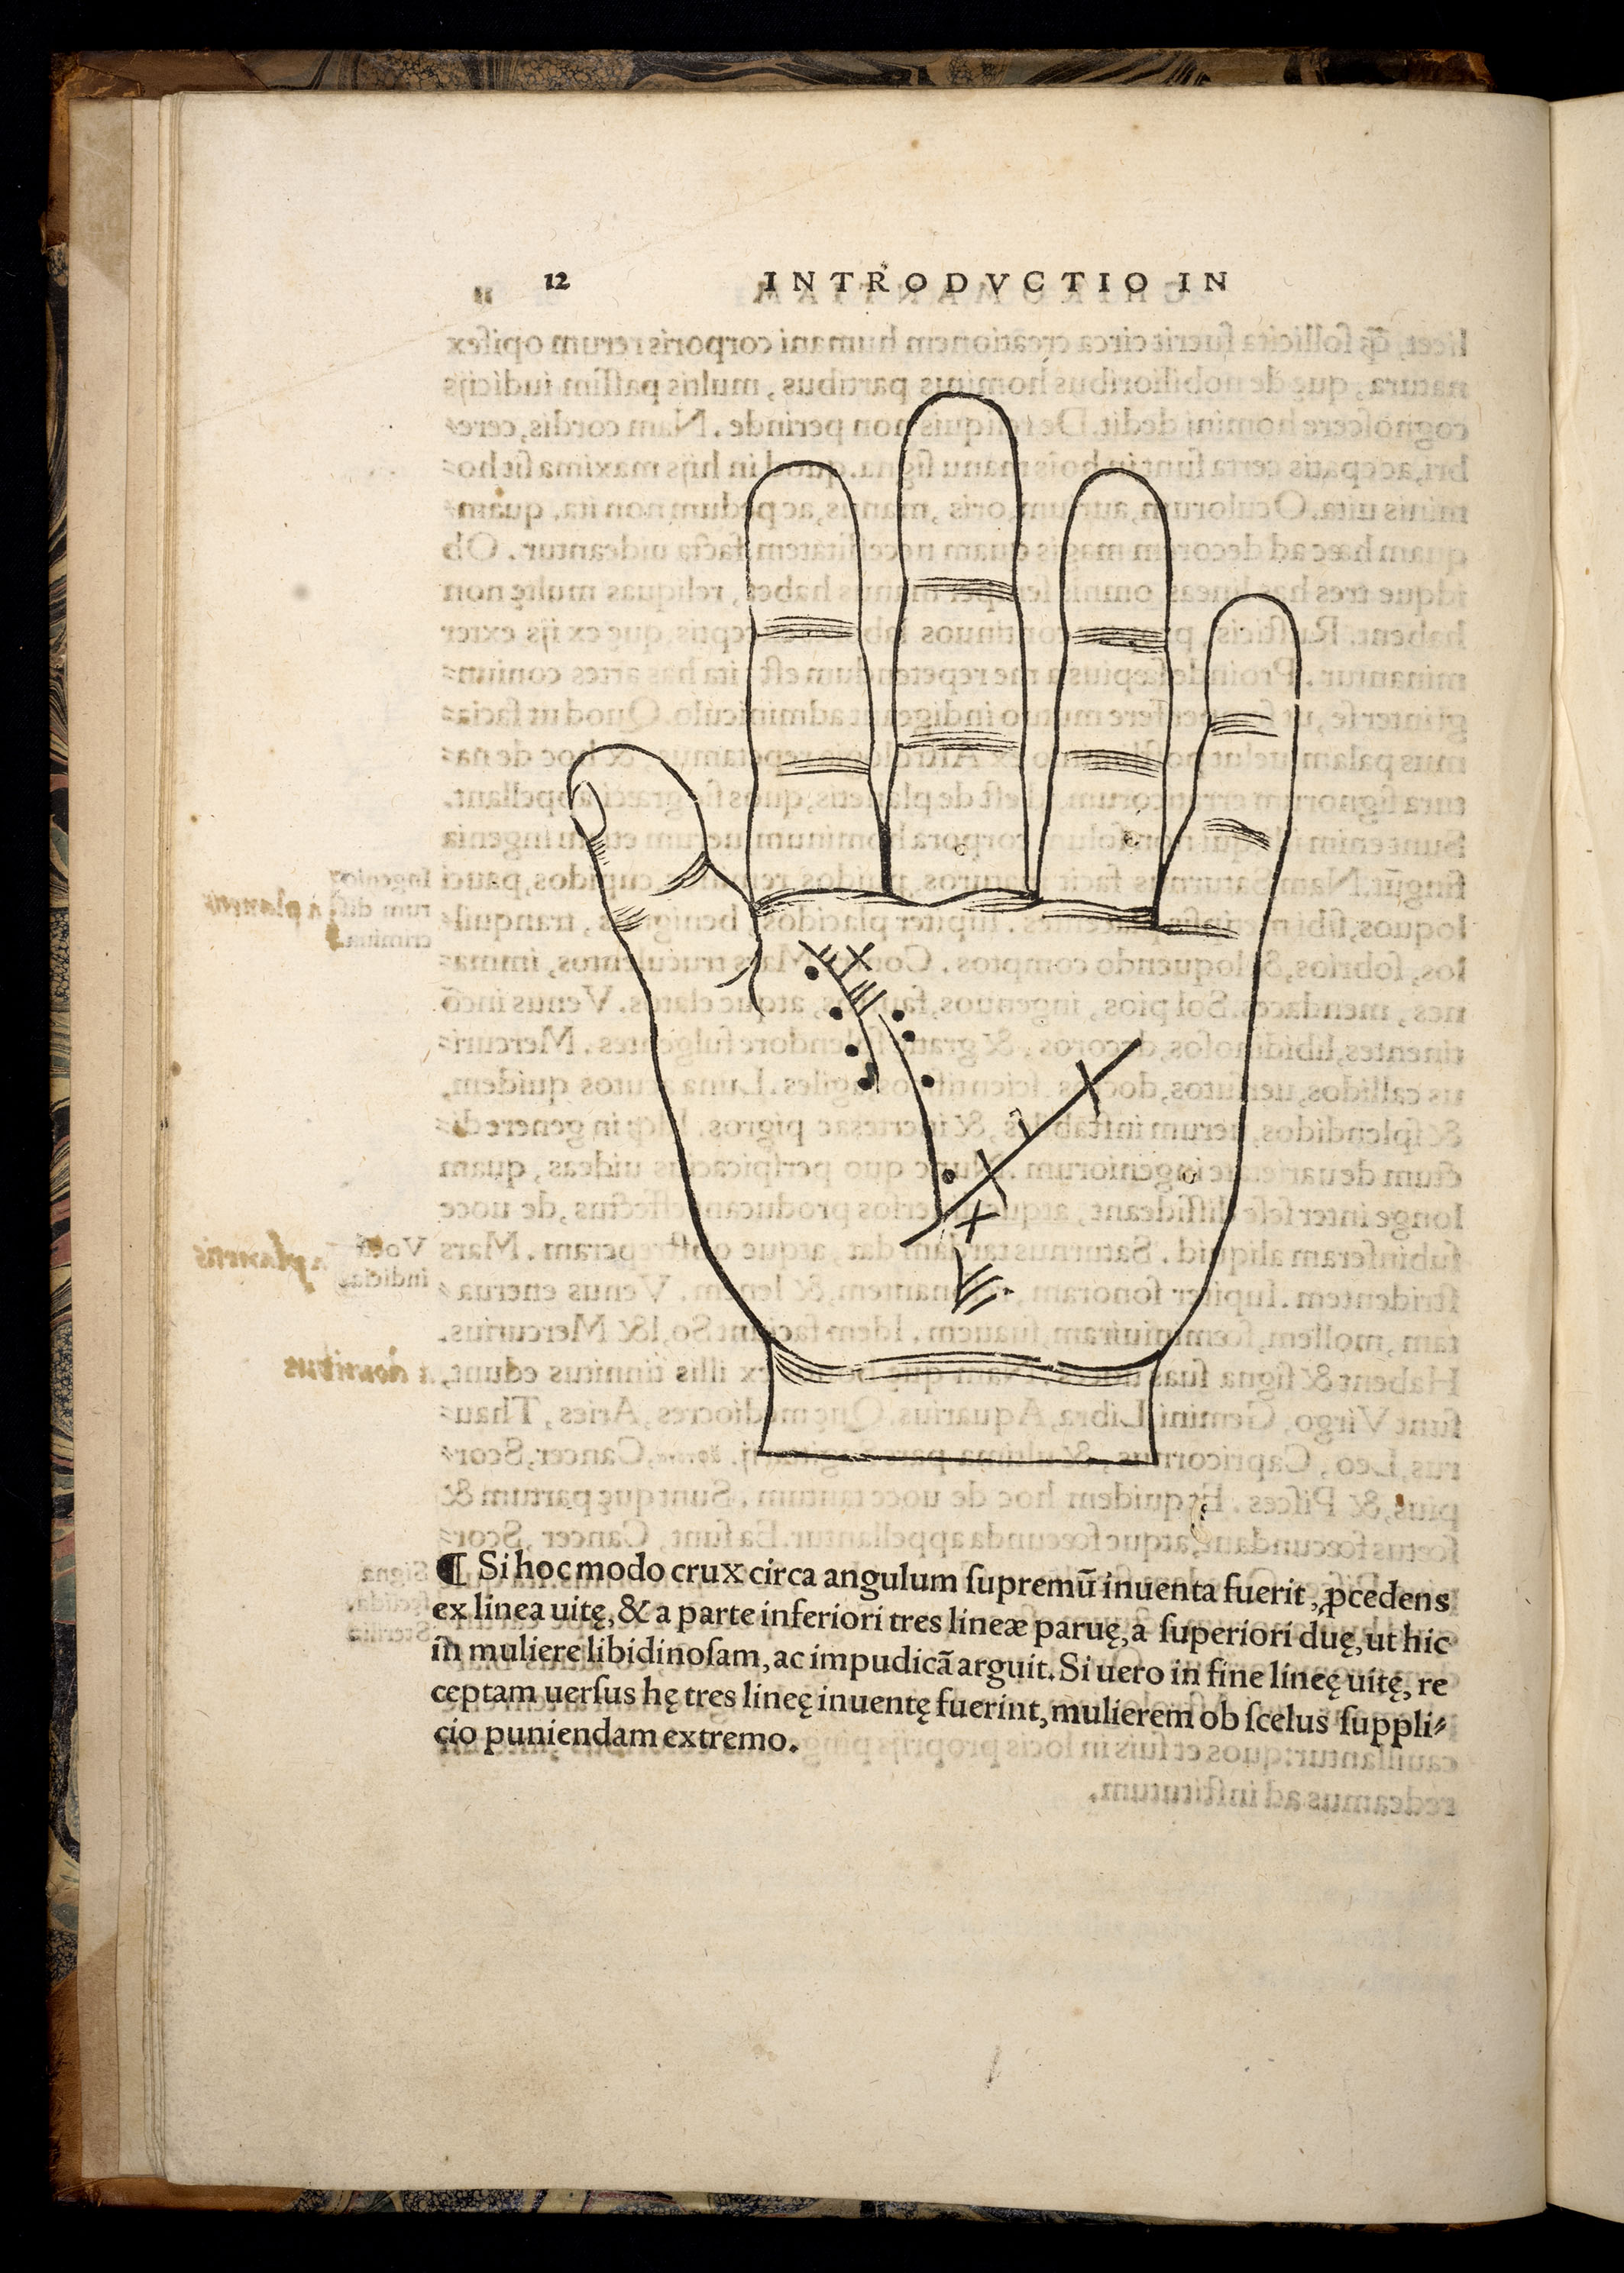 BT3.250.13, p.12, Johannes Indagine’s Chiromantia (1531)